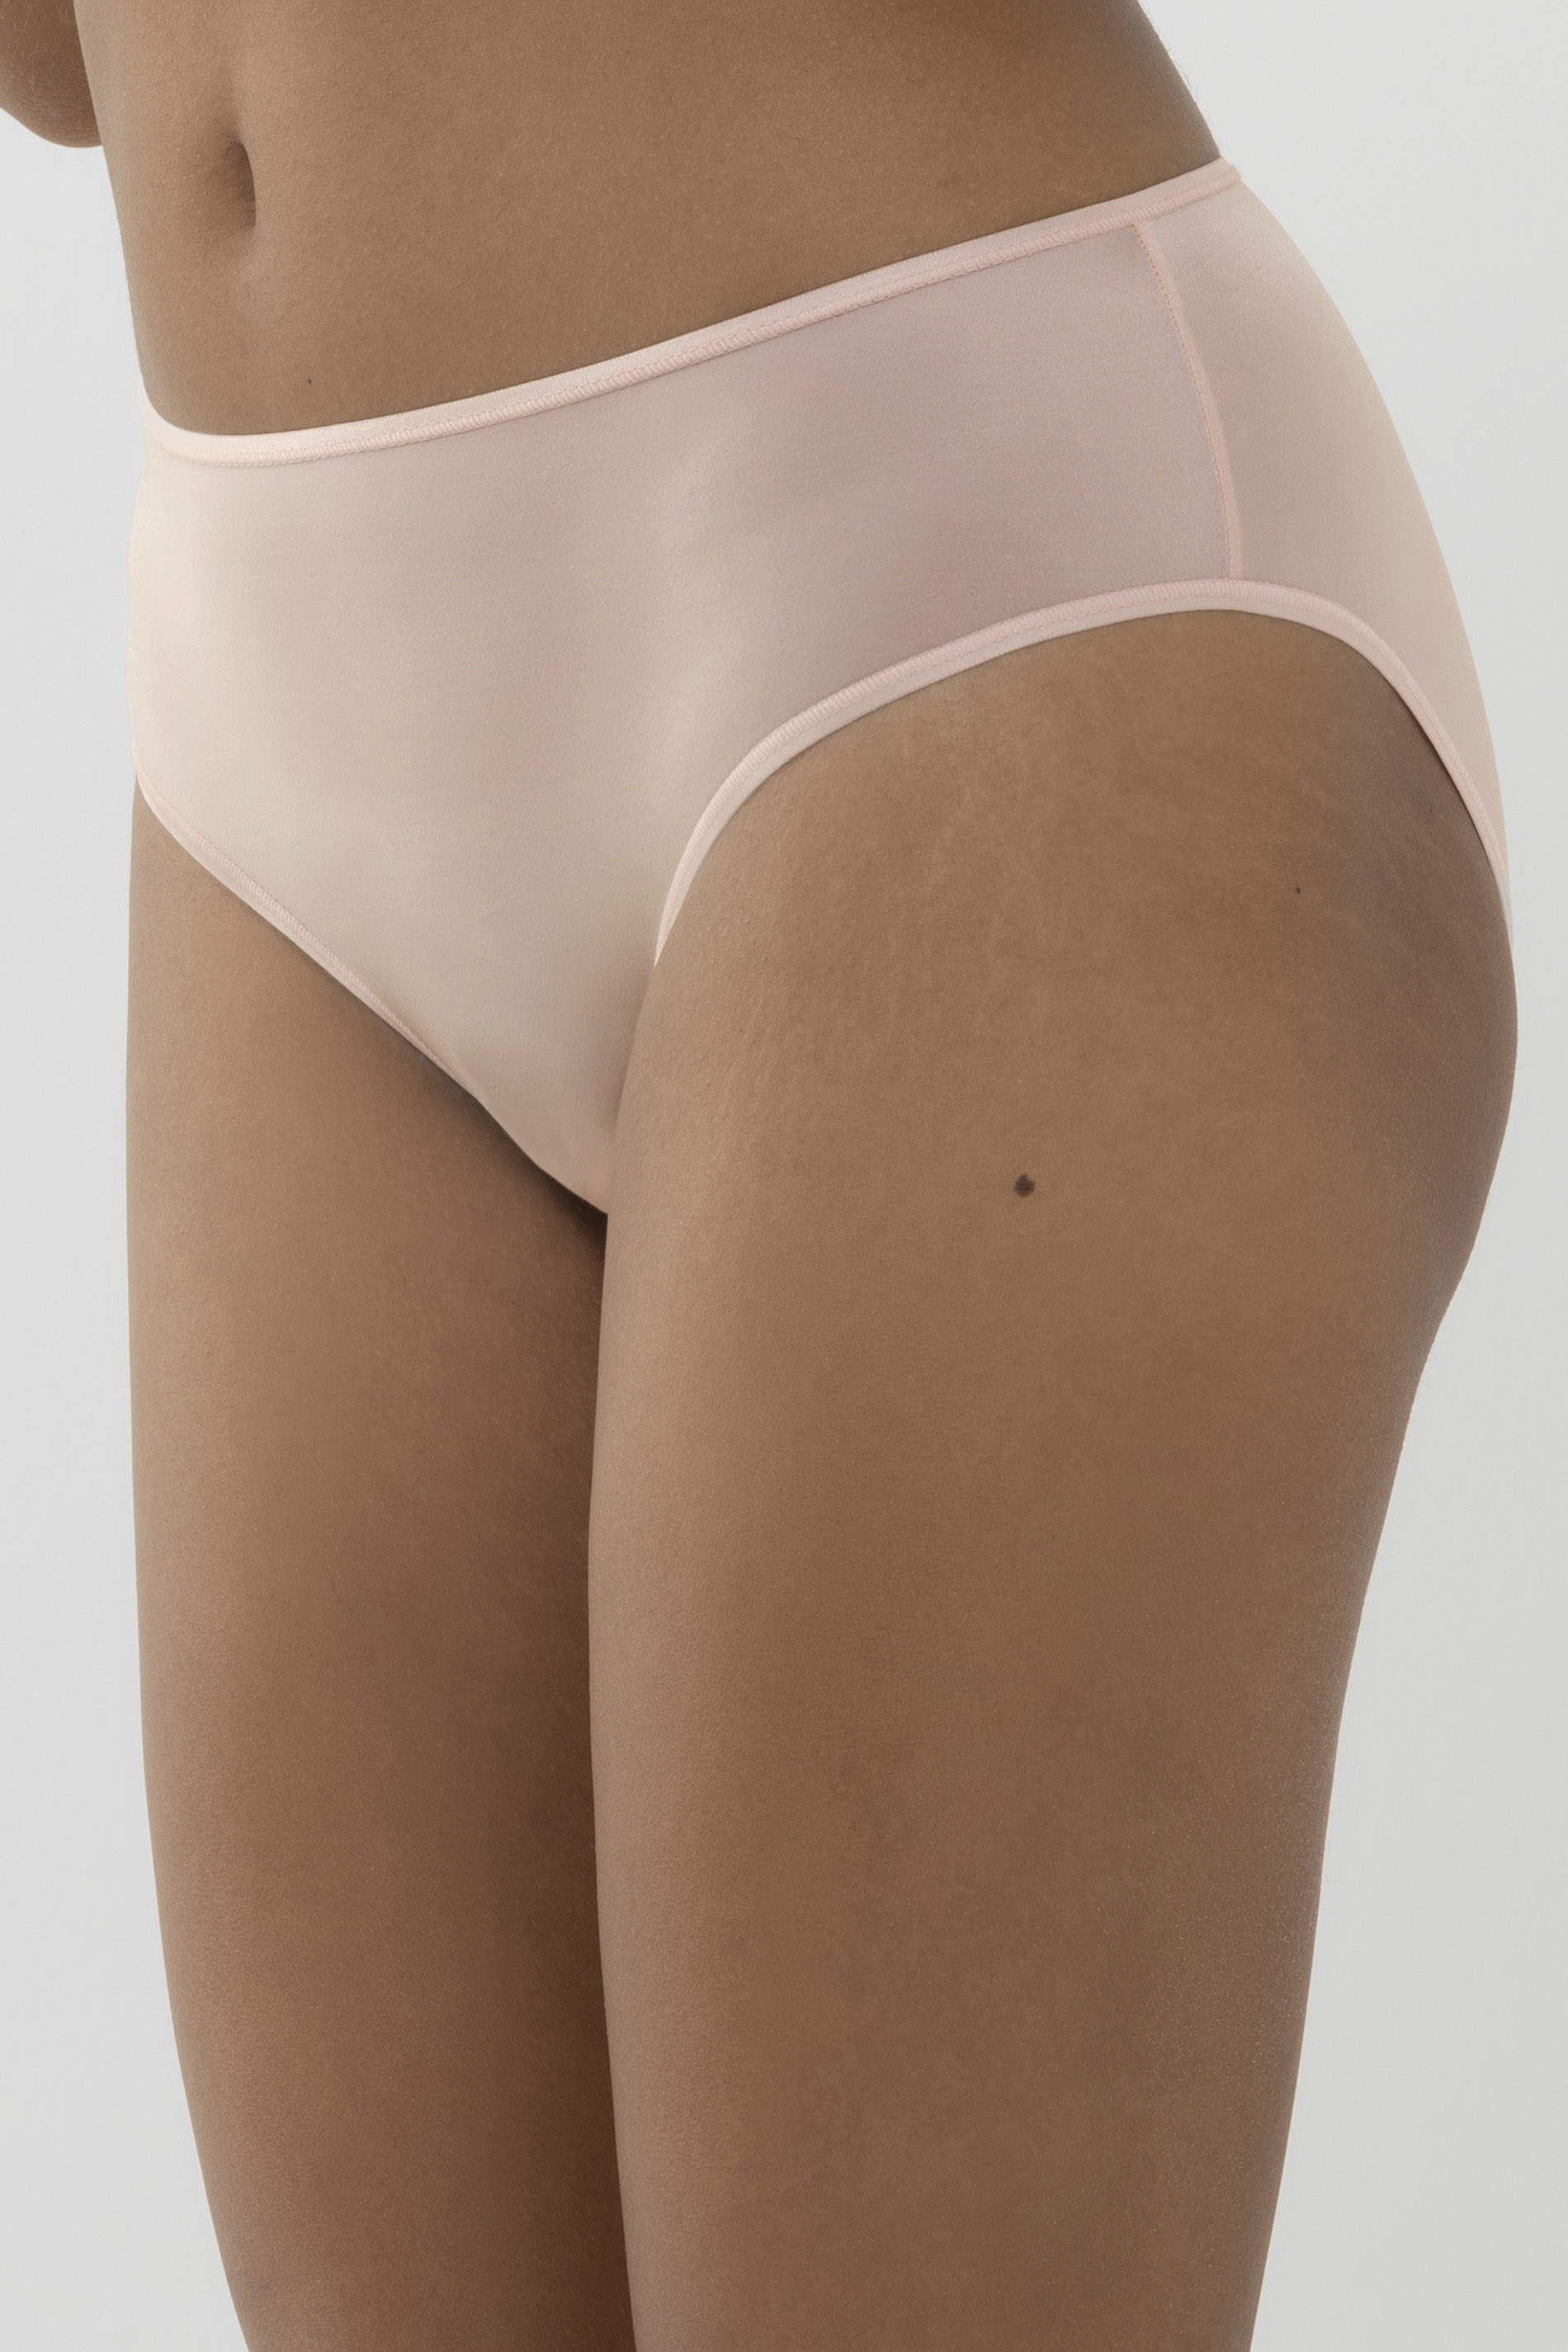 American-Pants Serie Joan Detailansicht 01 | mey®